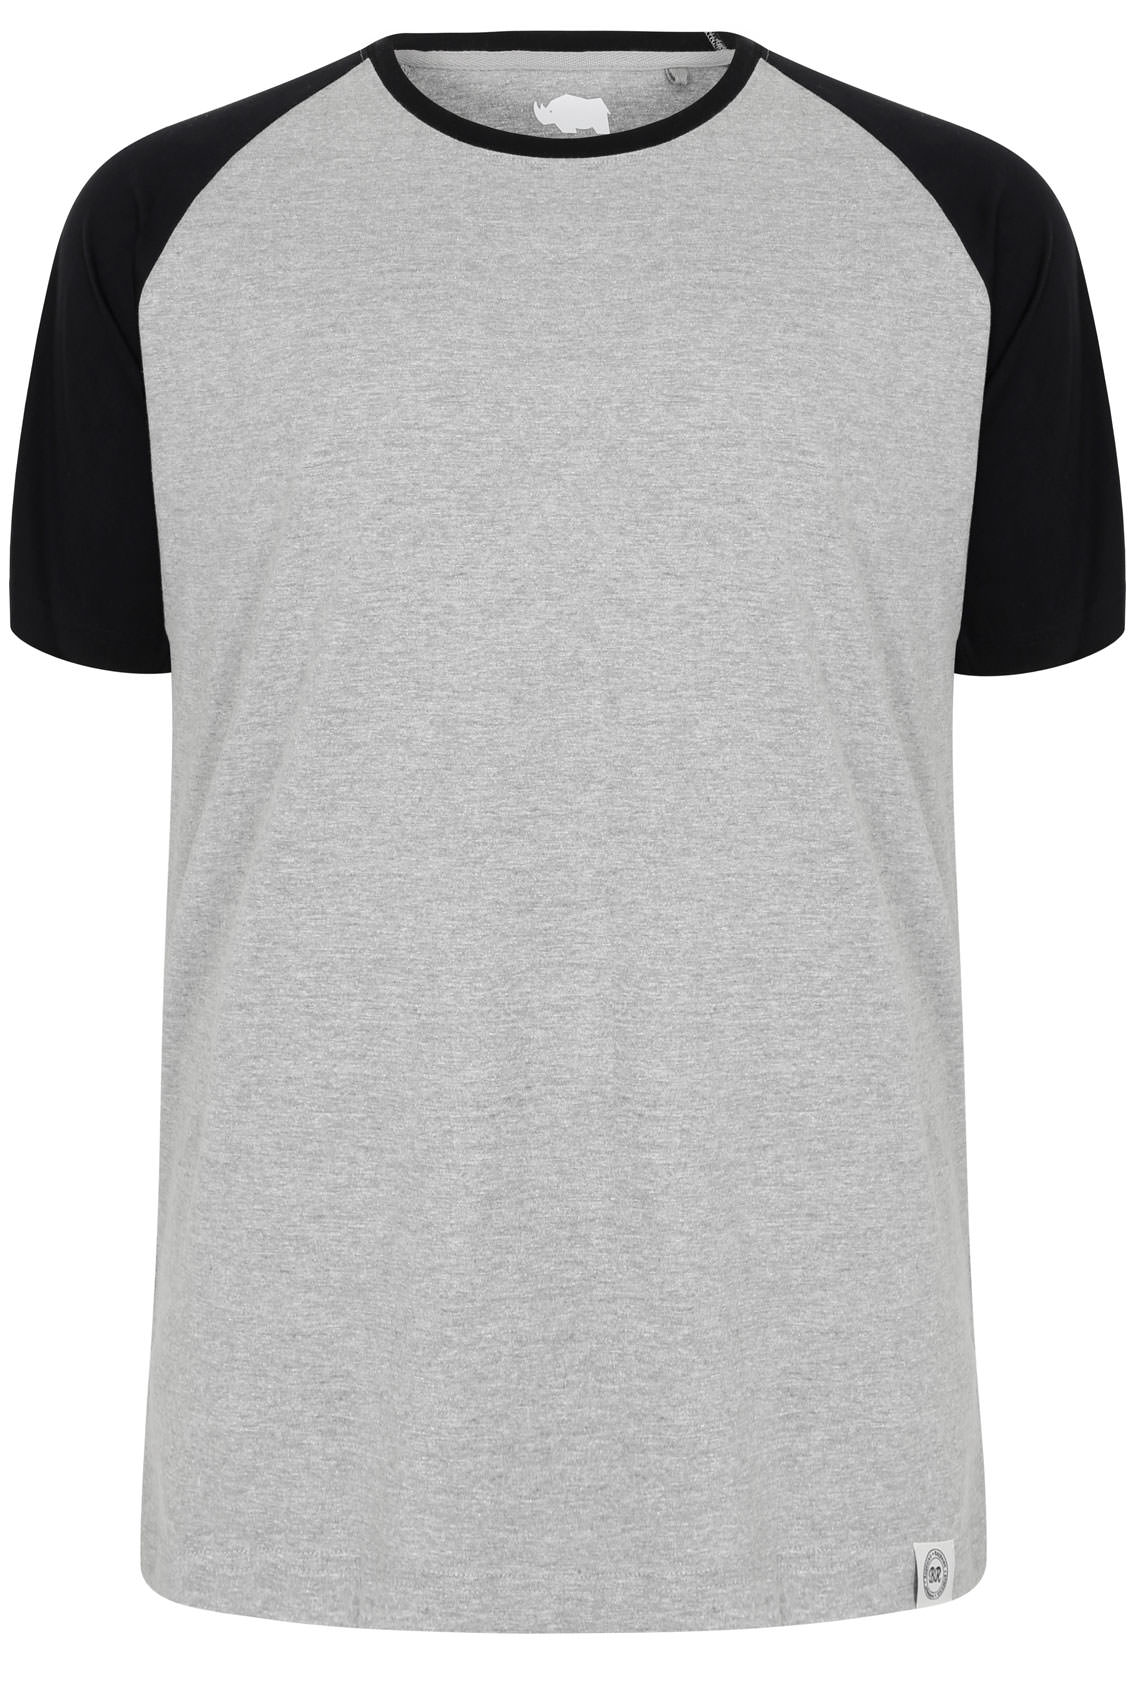 Download BadRhino Grey & Black Raglan T-Shirt With Short Sleeves ...